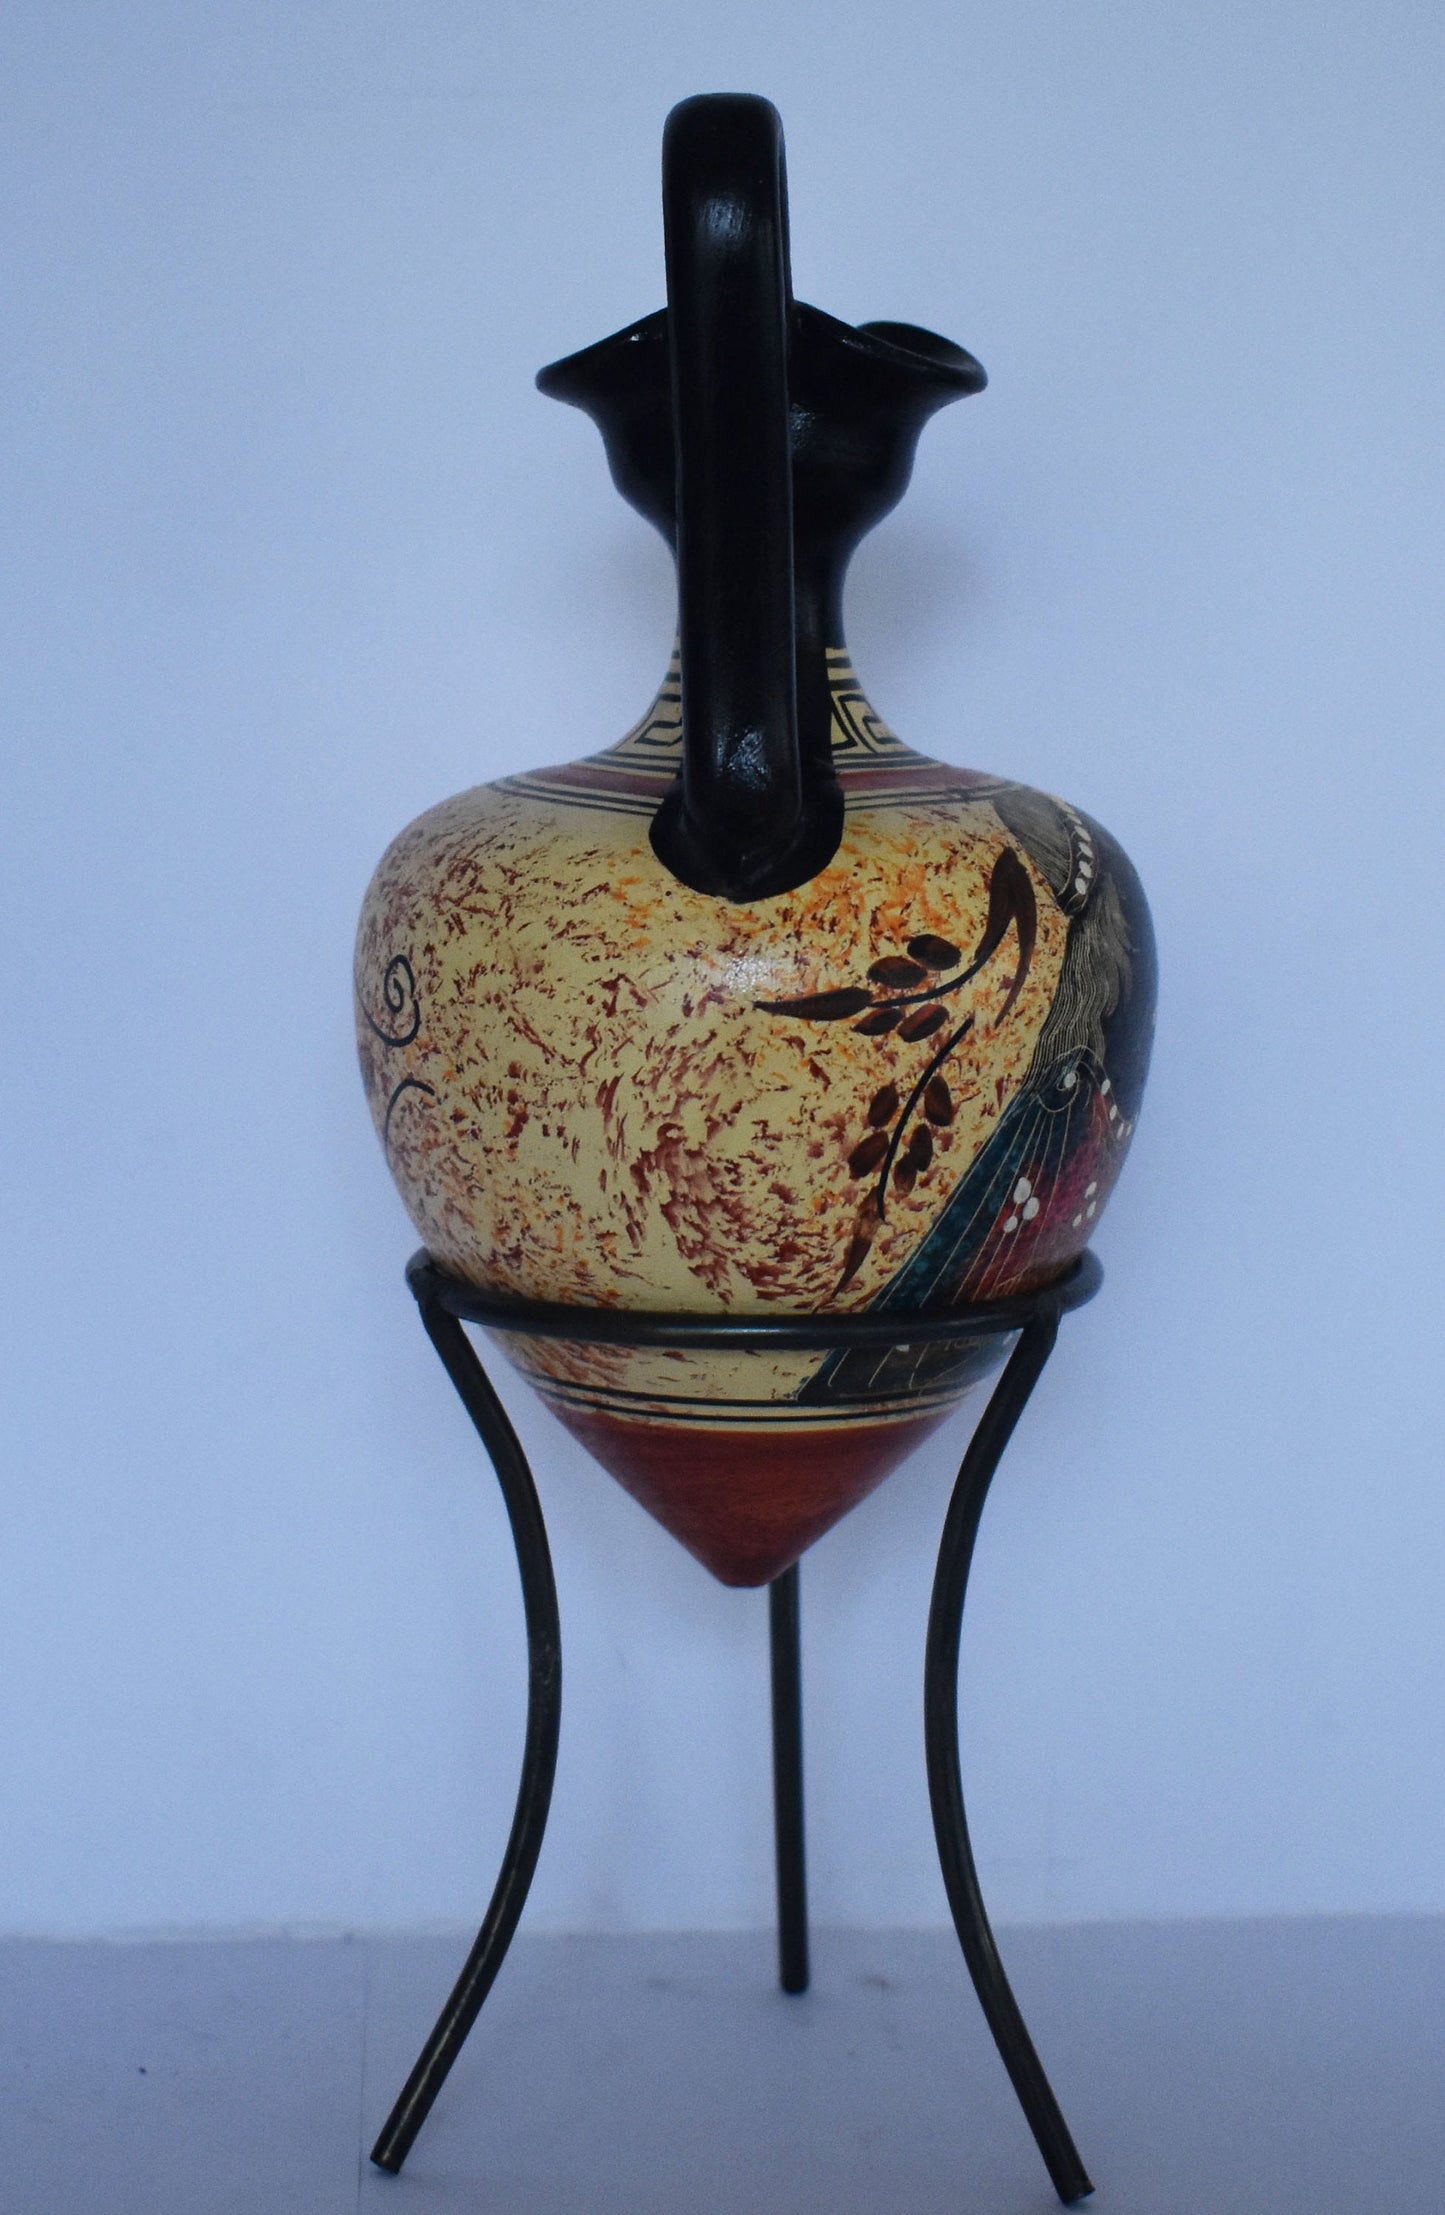 Rhyton - Vessel for Libations or Drinking - Estia - Goddess of Hearth, Family, Home, State - Floral design - Ceramic Vase